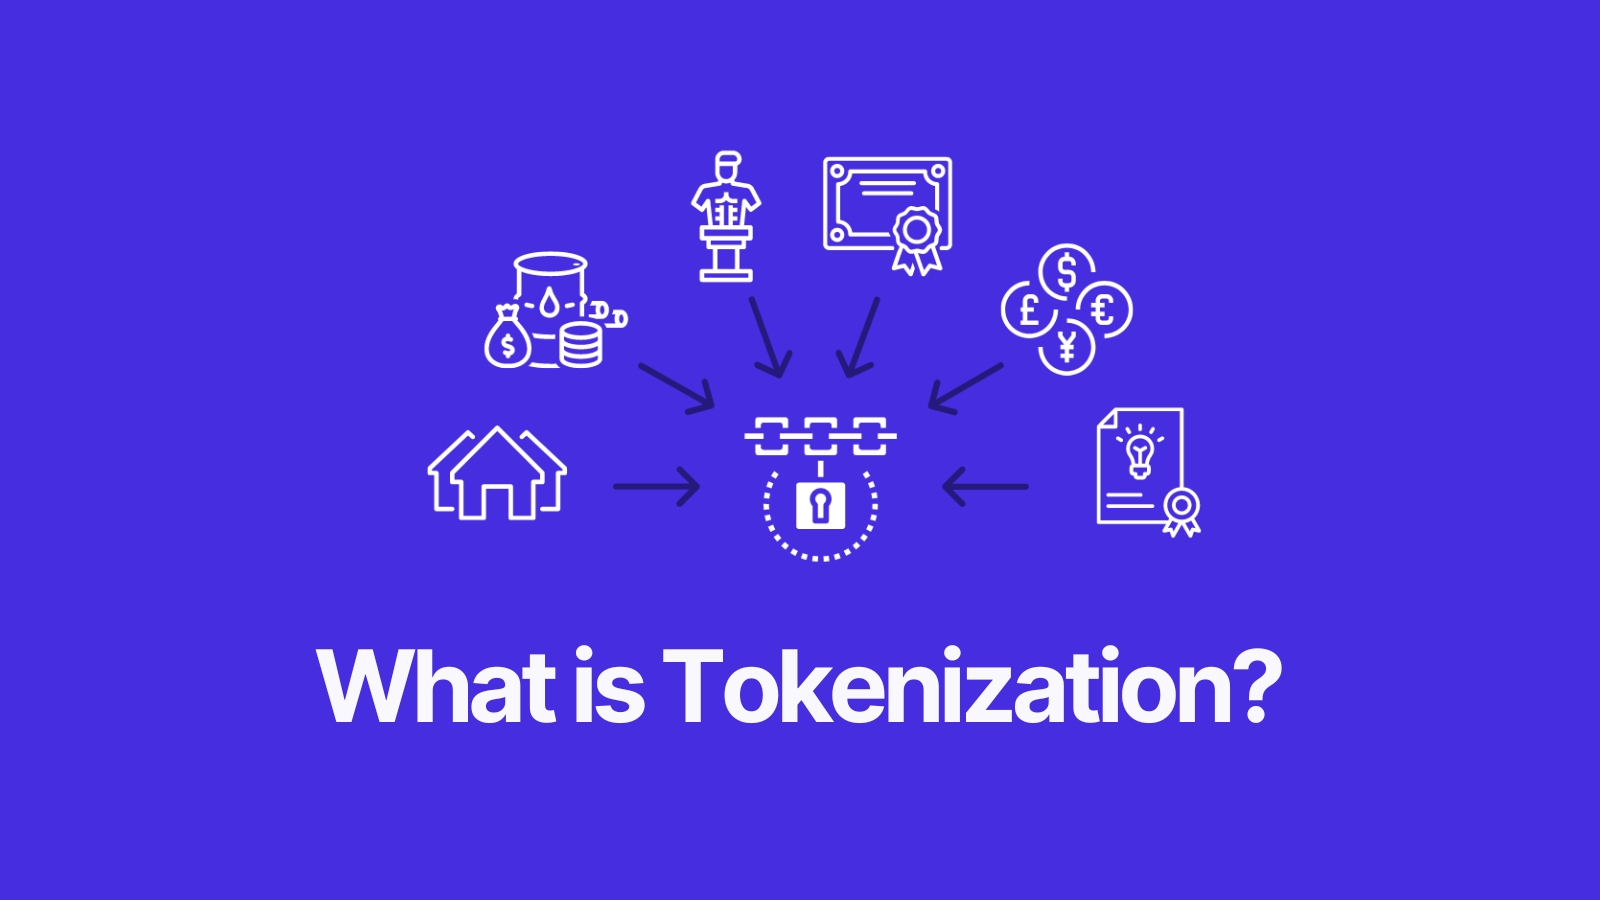 What is Tokenization on Blockchain?